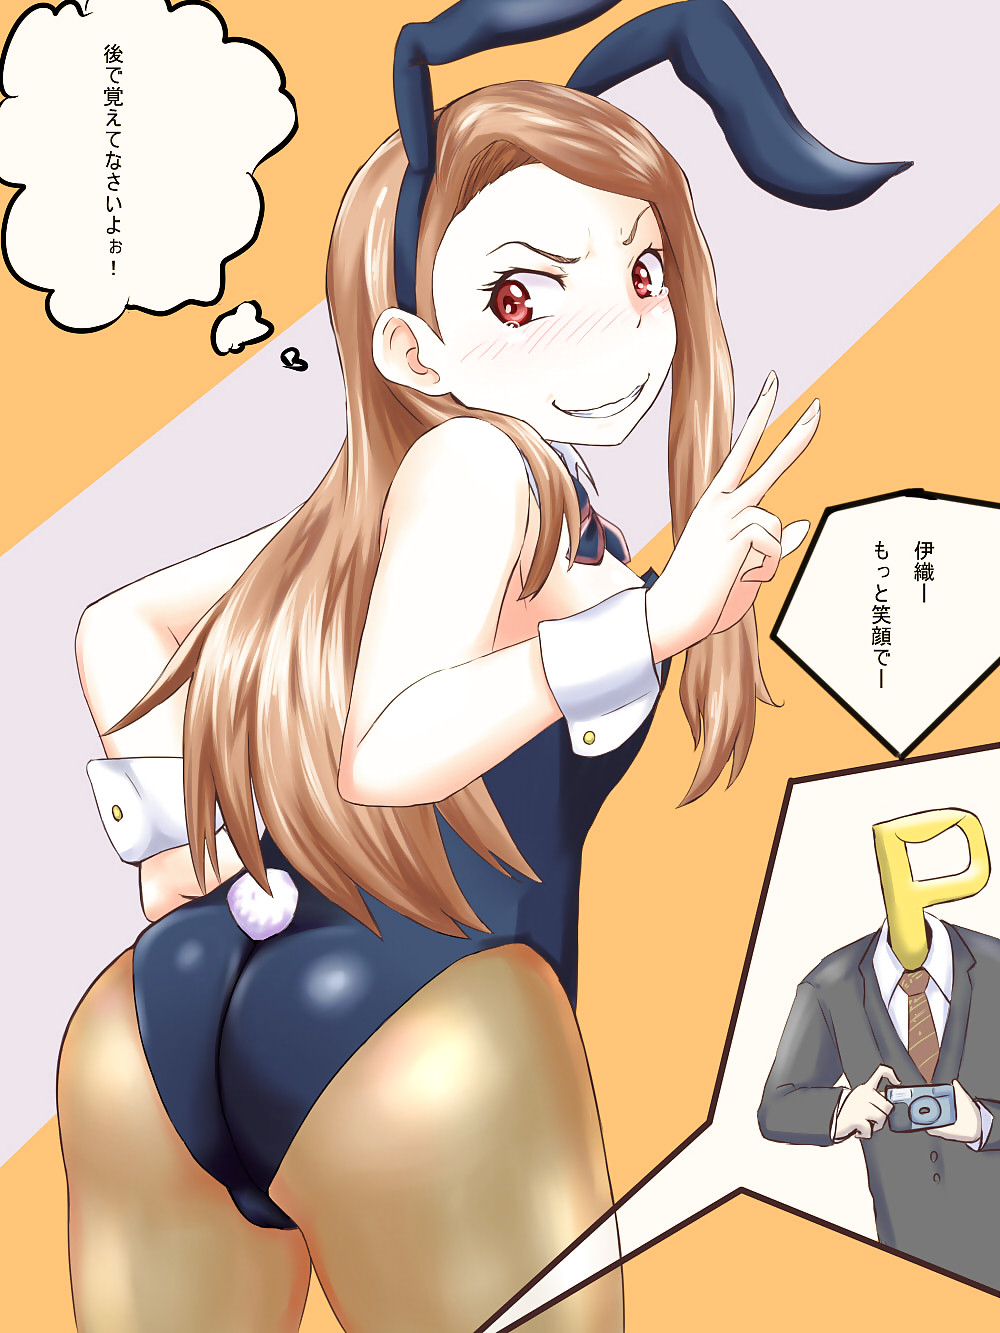 Dat Ass! Anime Style 19 #18620815